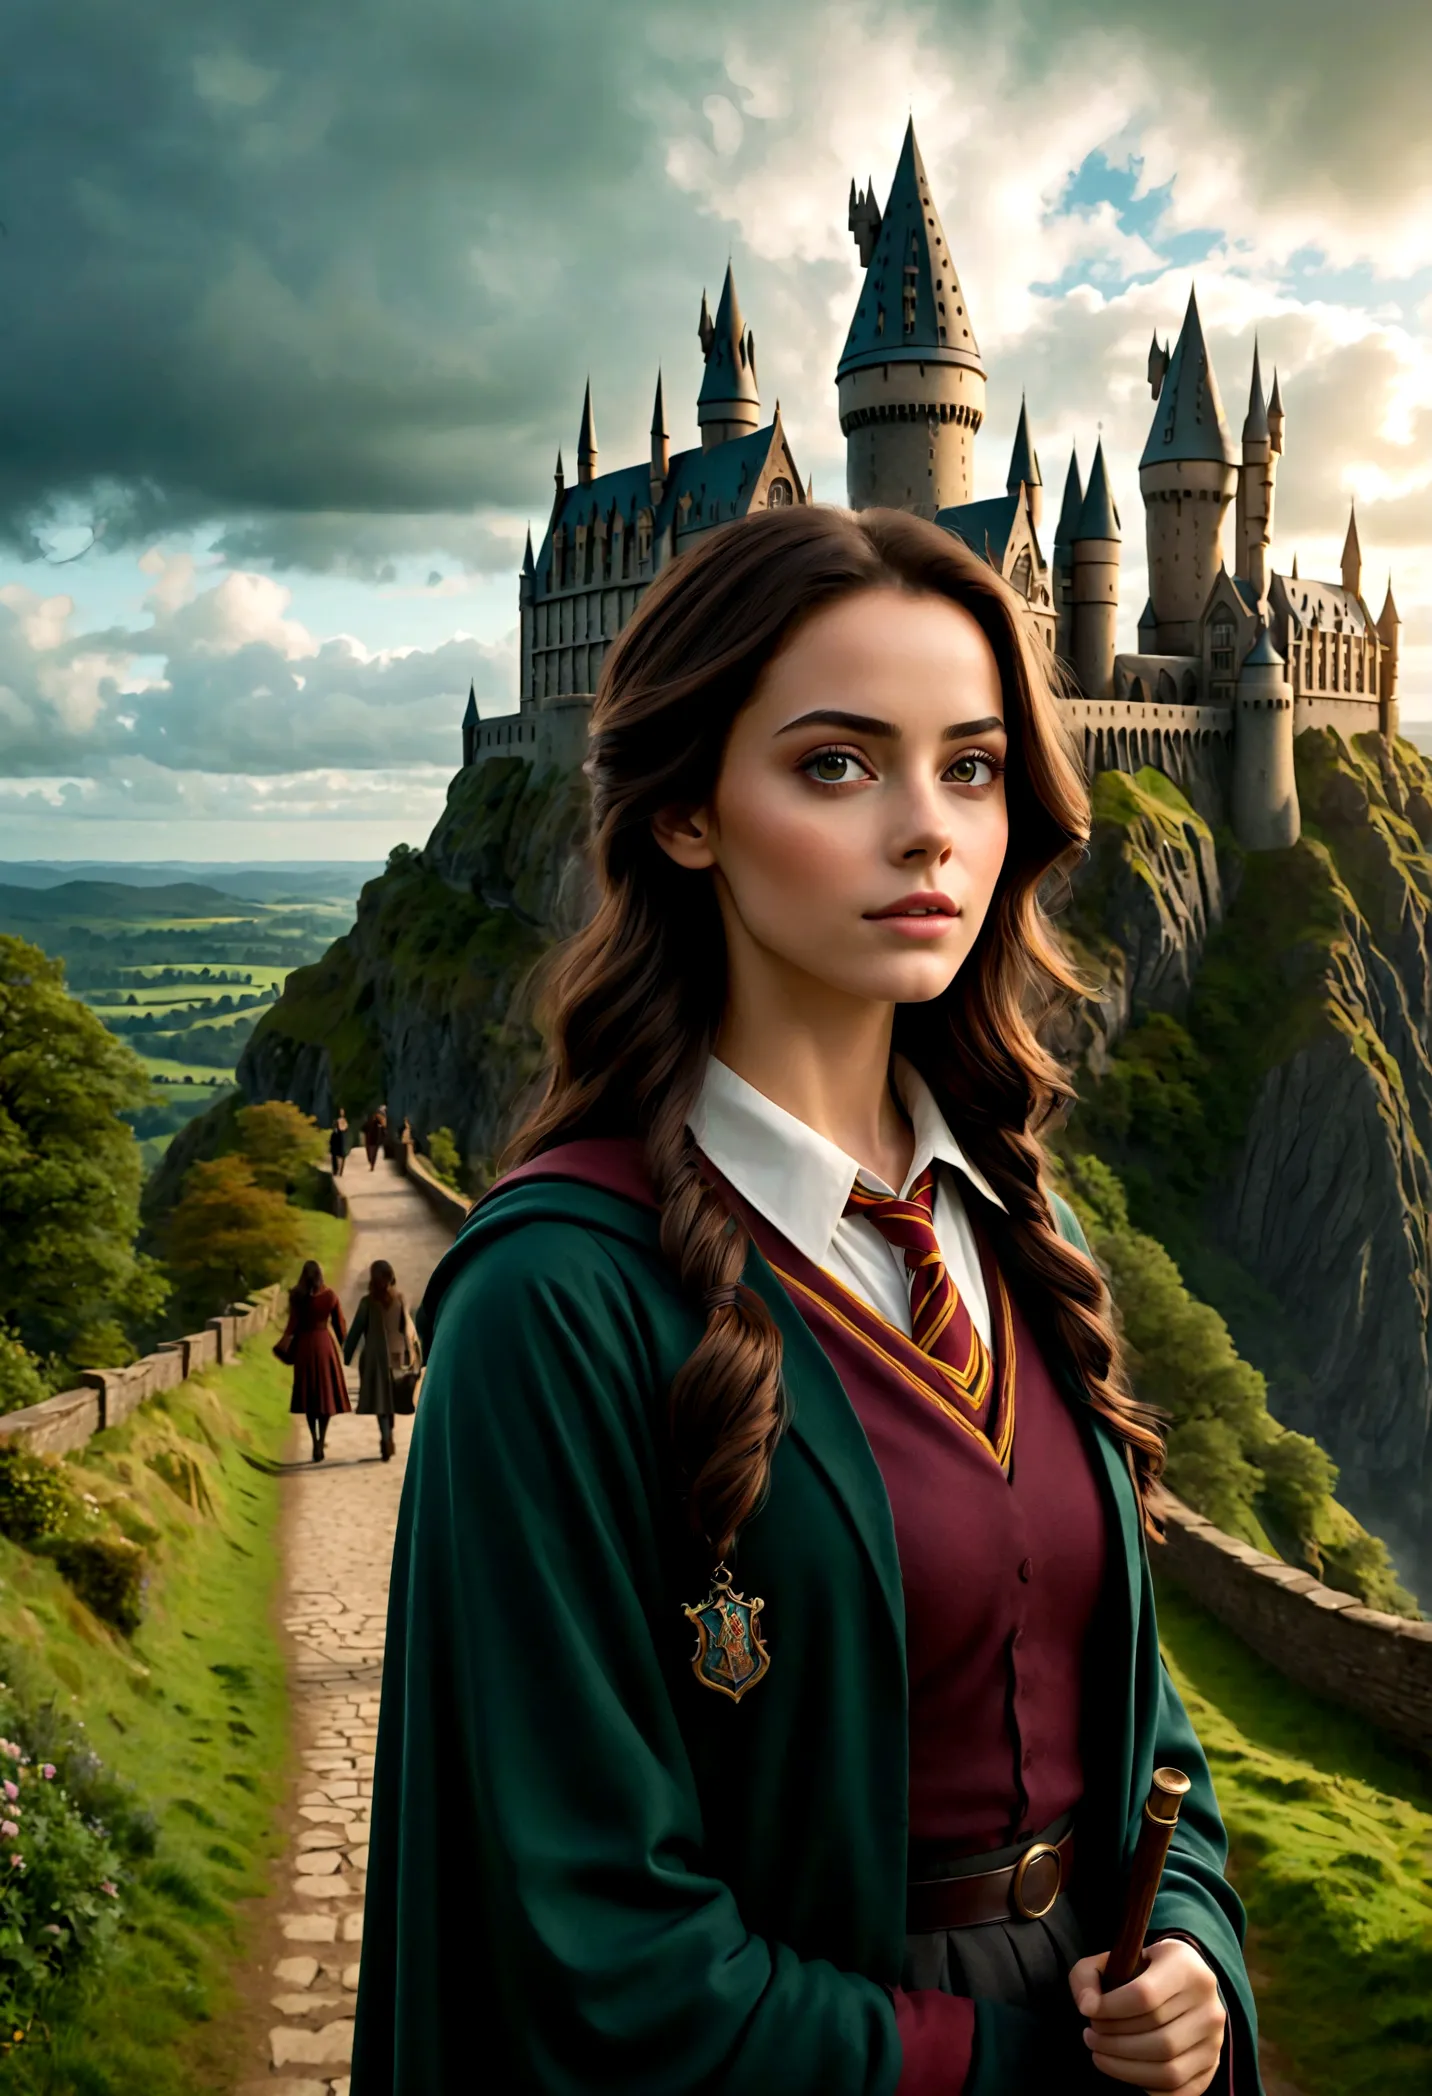 1 girl walking towards Hogwarts School of Witchcraft and Wizardry, looks like kaya scodelario, beautiful detailed eyes, beautifu...